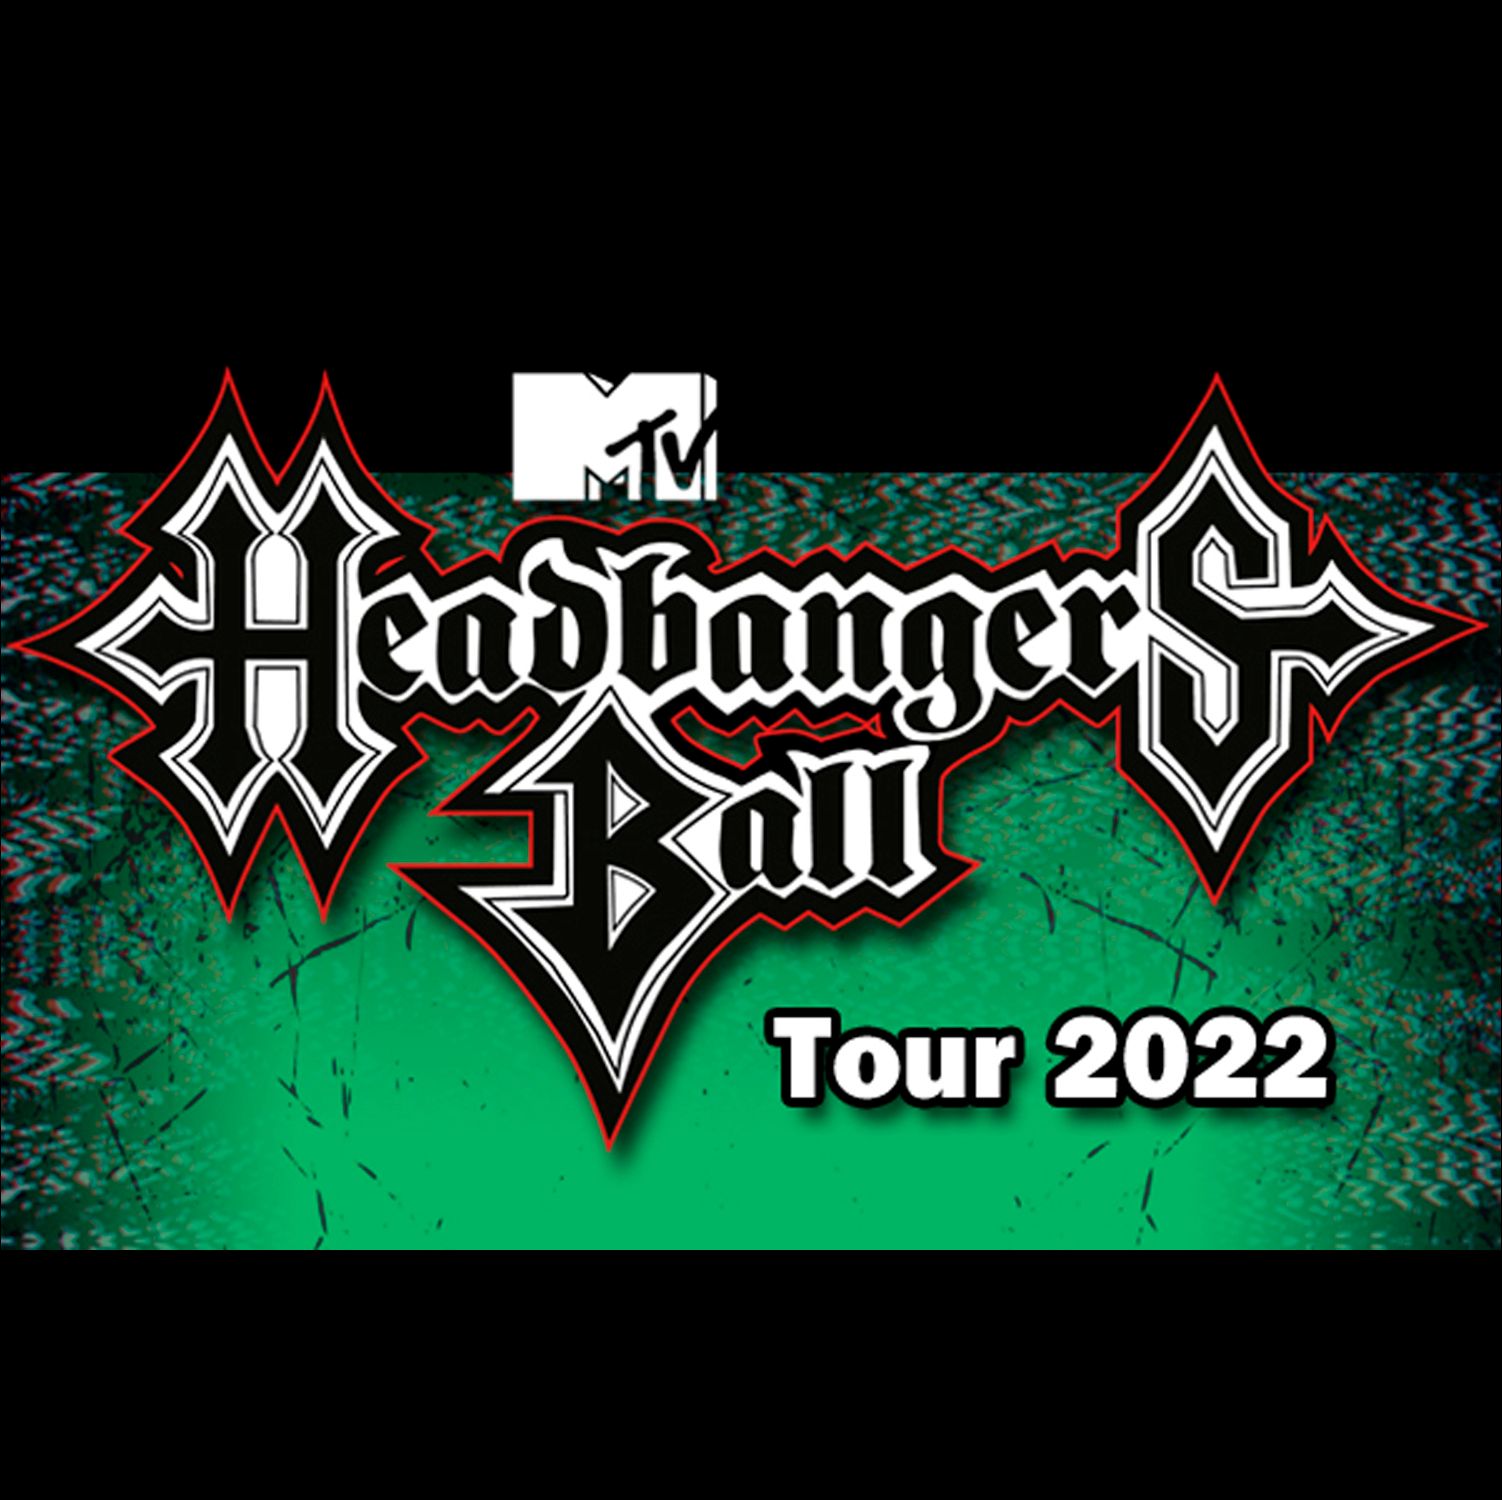 MTV HEADBANGER’S BALL TOUR 2022